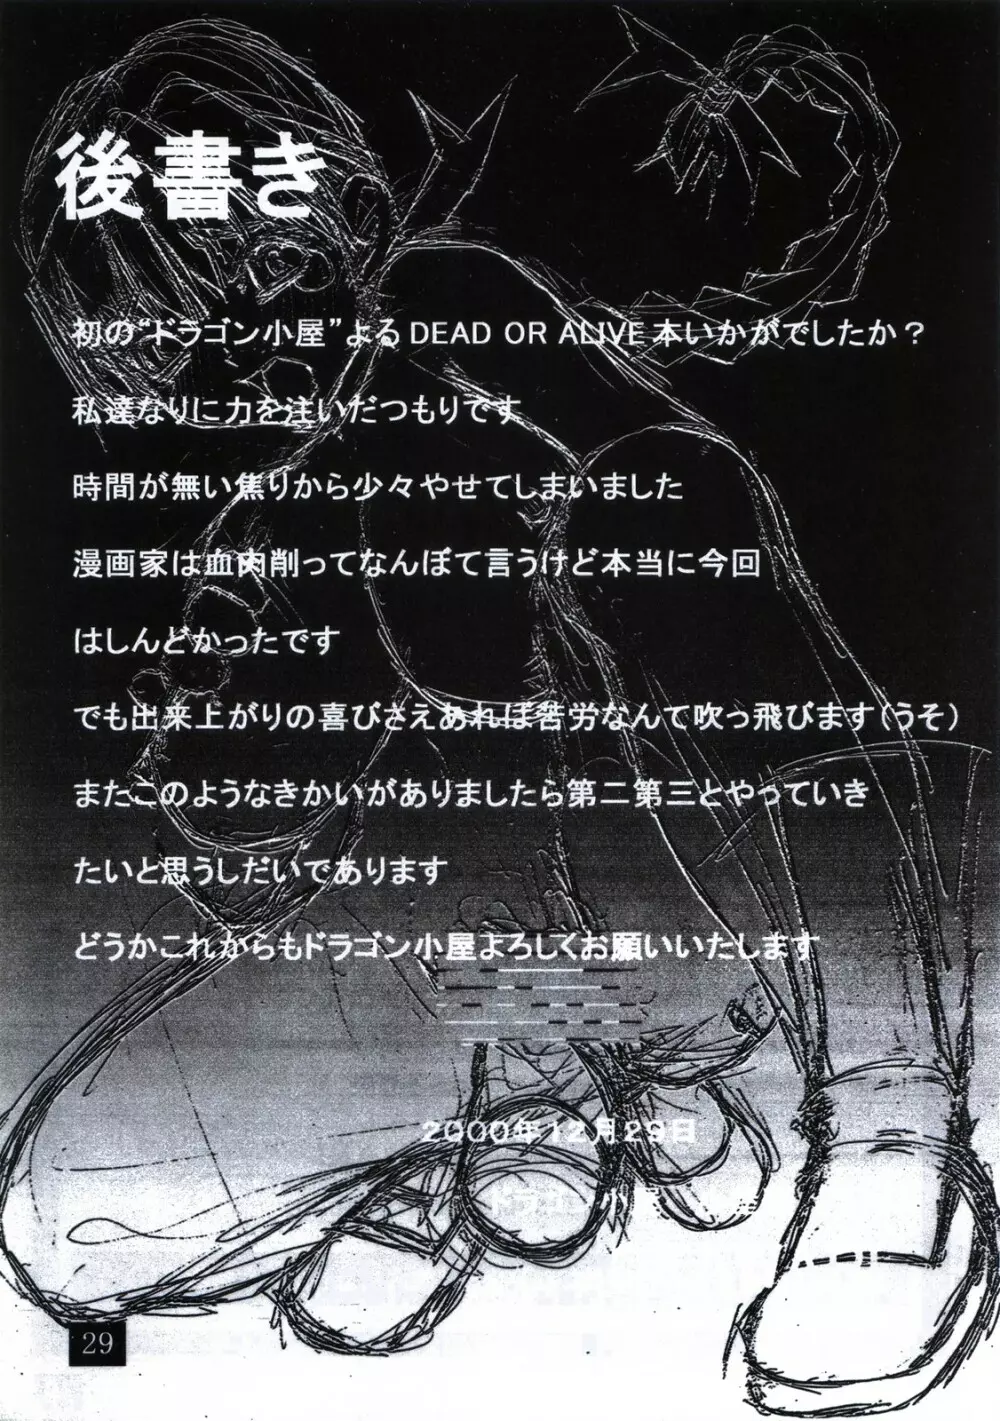 D.O.A KASUMI - page29